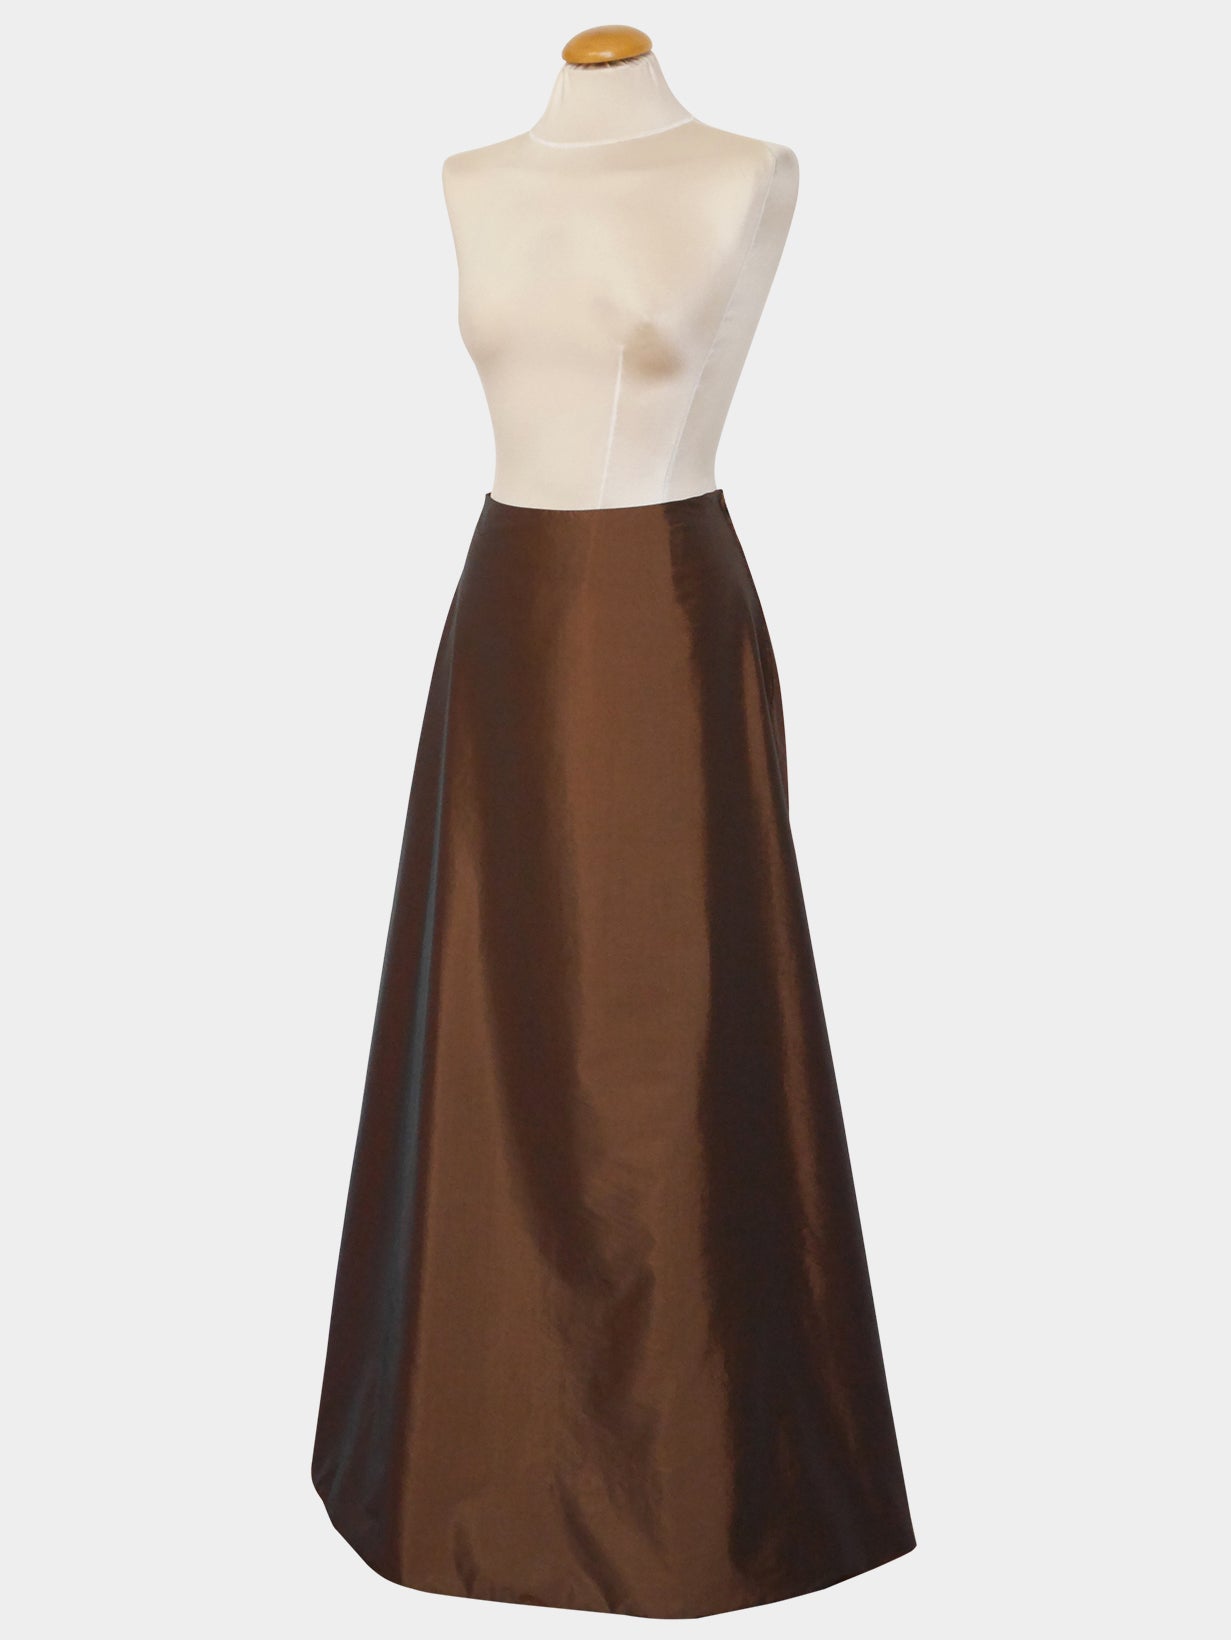 CLAUDE MONTANA 1990s Vintage Minimalist Copper Silk Maxi Evening Ball Gown Skirt Size S